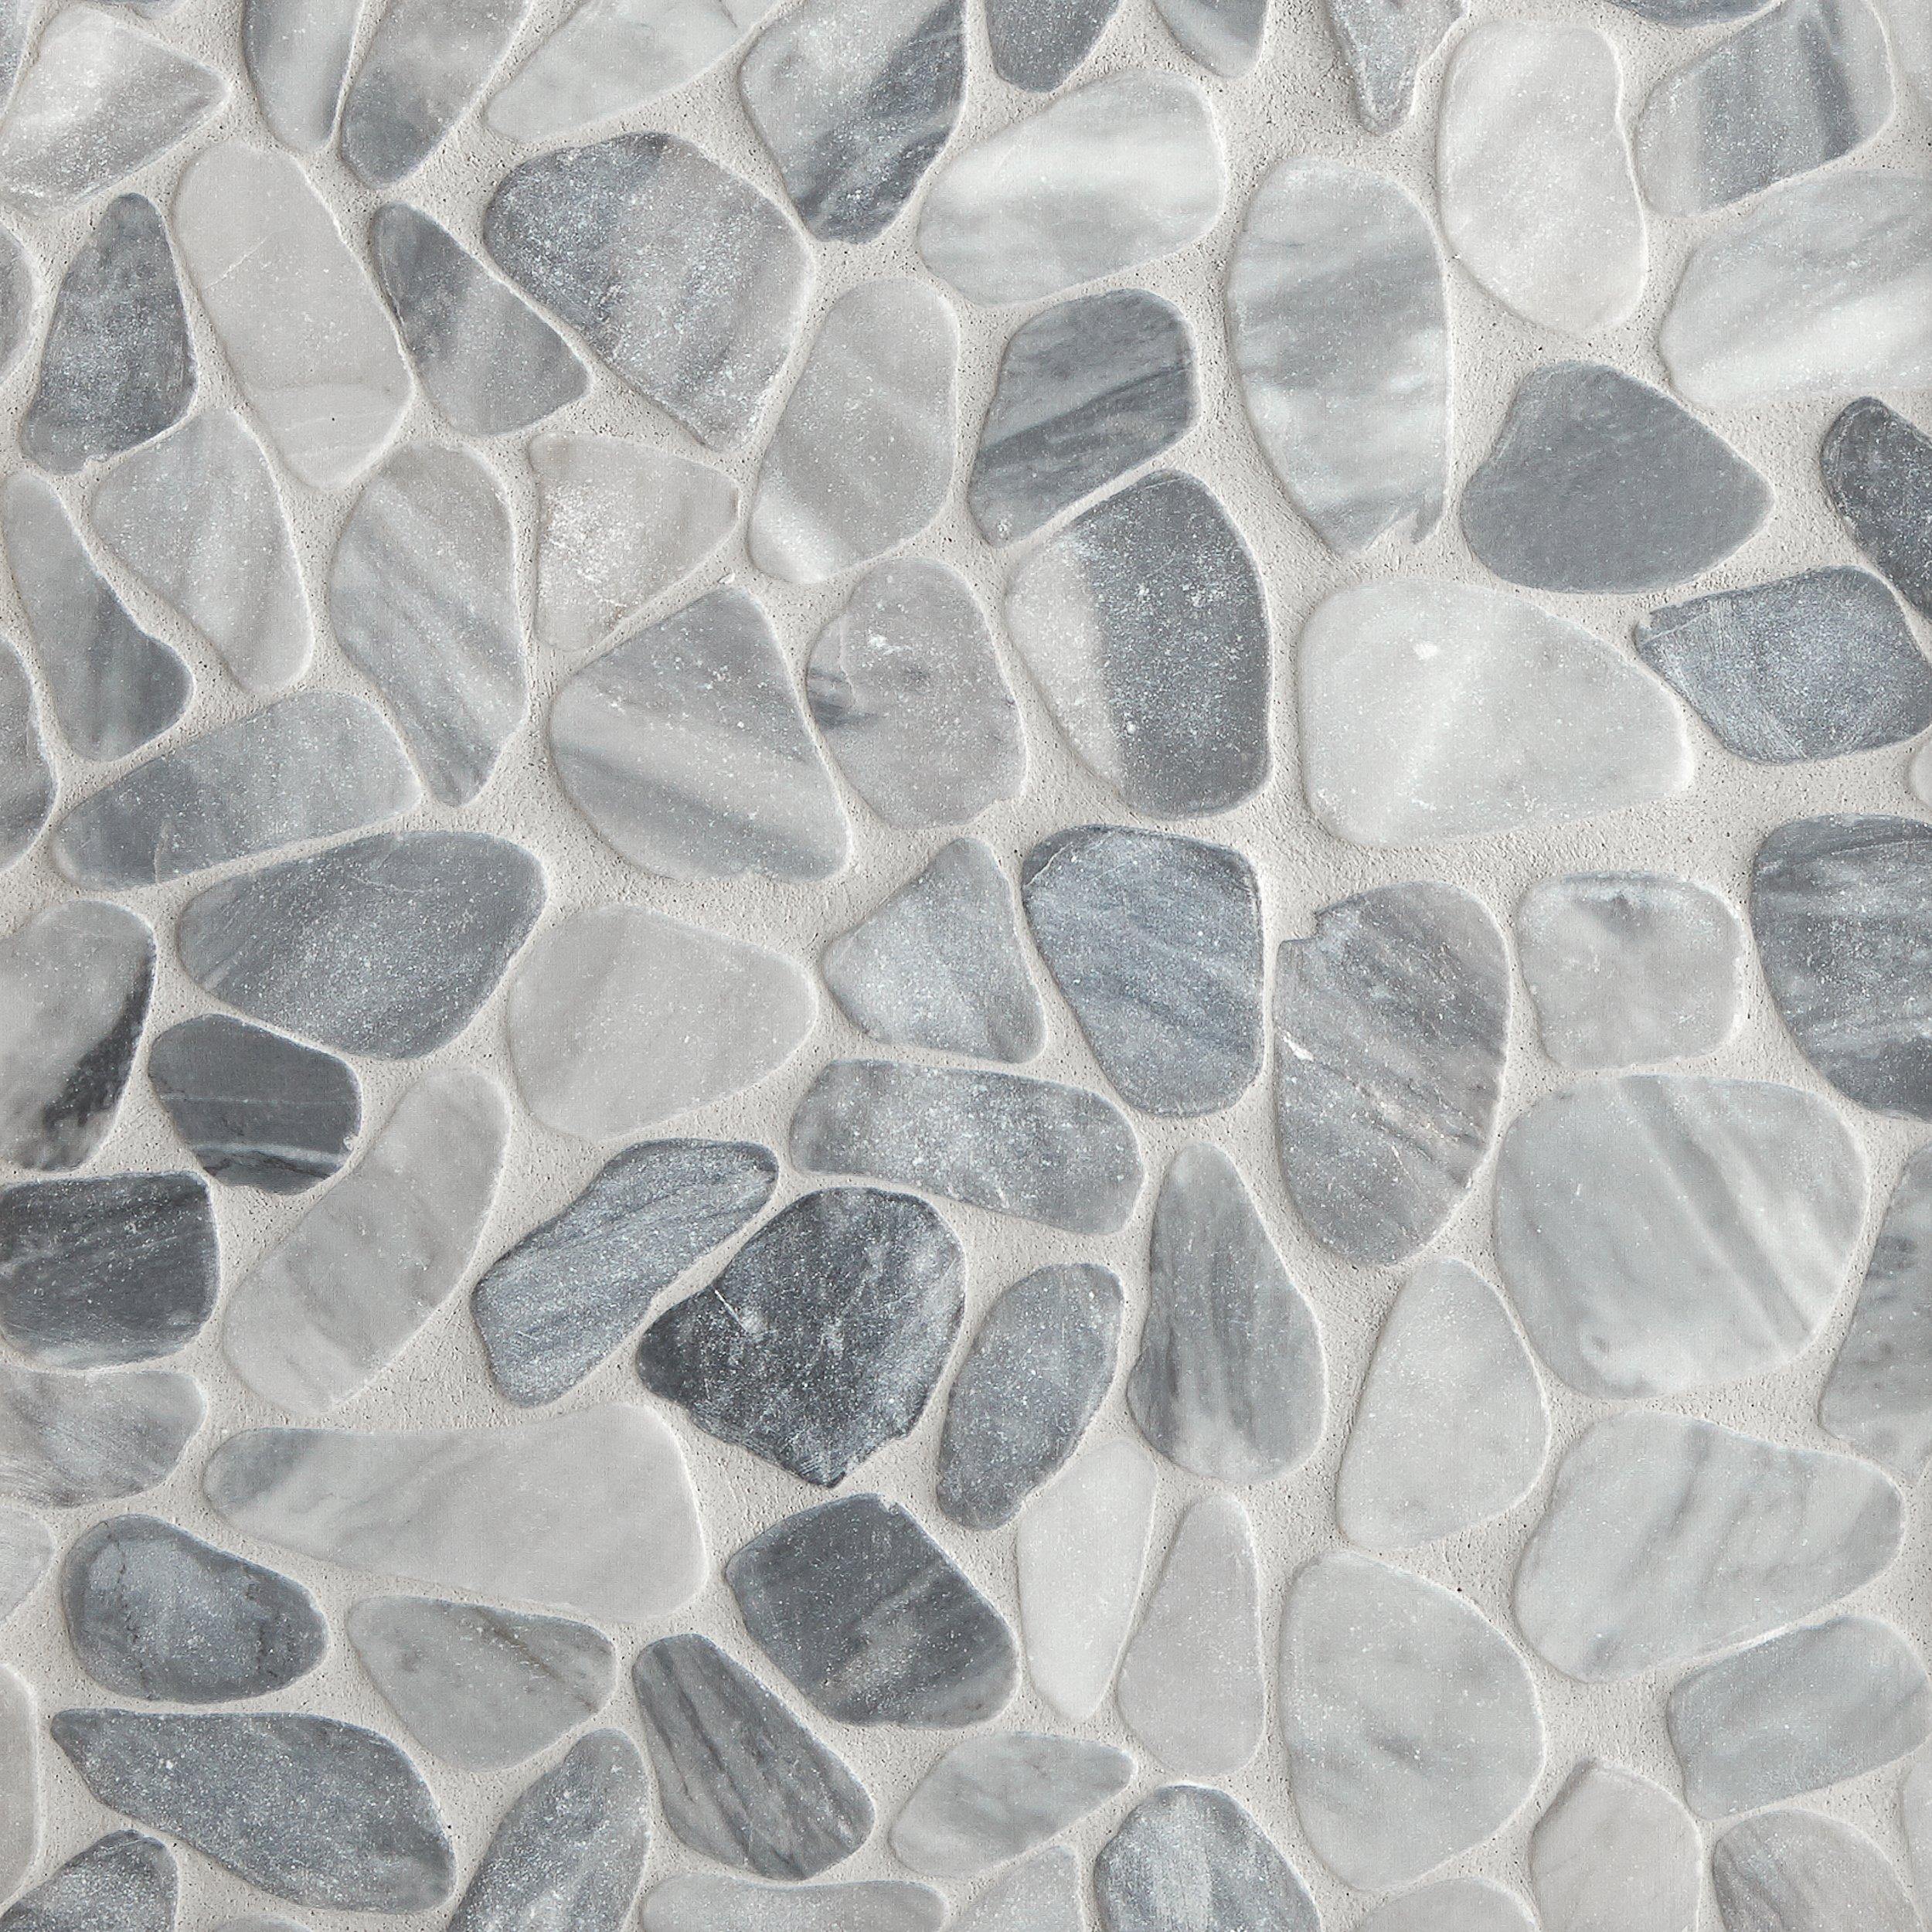 Ice Blue Pebble Mosaic Floor And Decor, Pebble Tile Mosaics